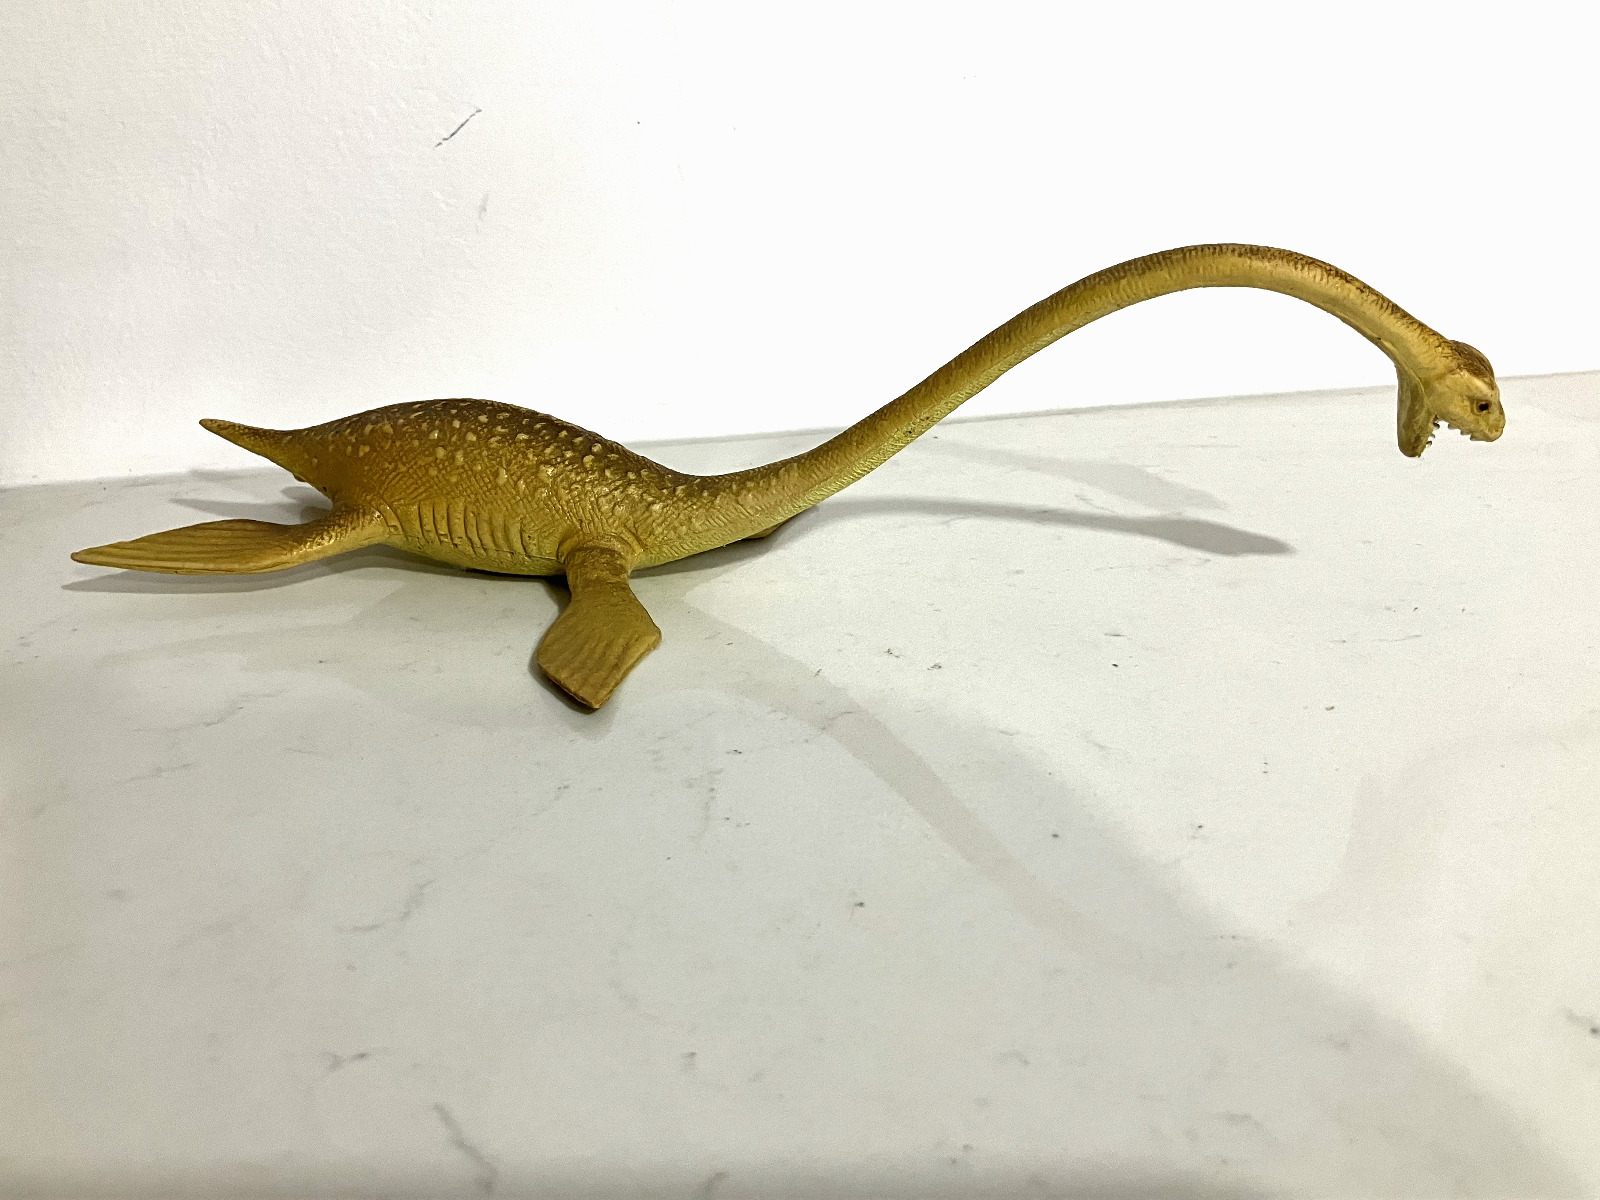 Vintage 1980s rubber Plesiosaurus Plesiosaur dinosaur figurine model toy